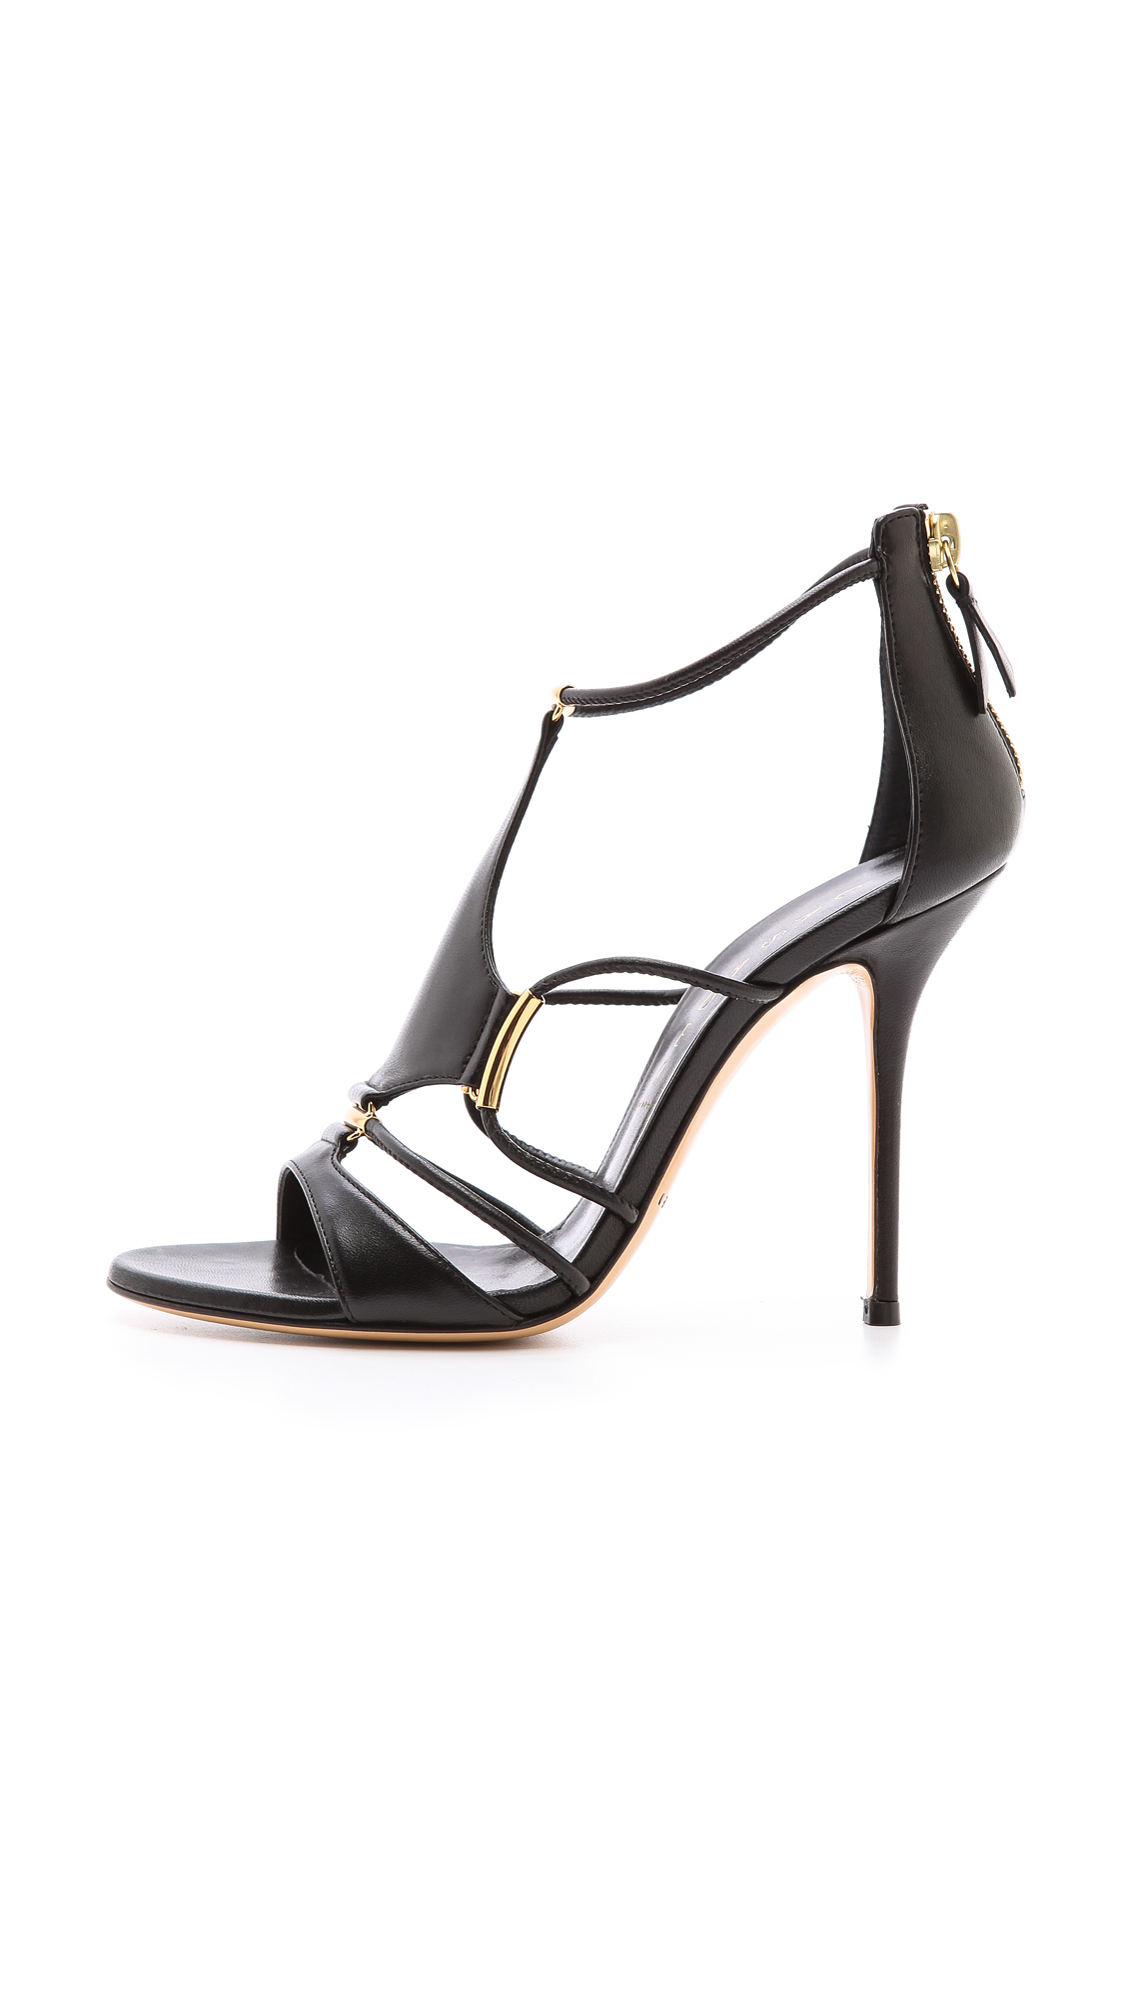 Lyst - Casadei Strappy Stiletto Sandals in Black